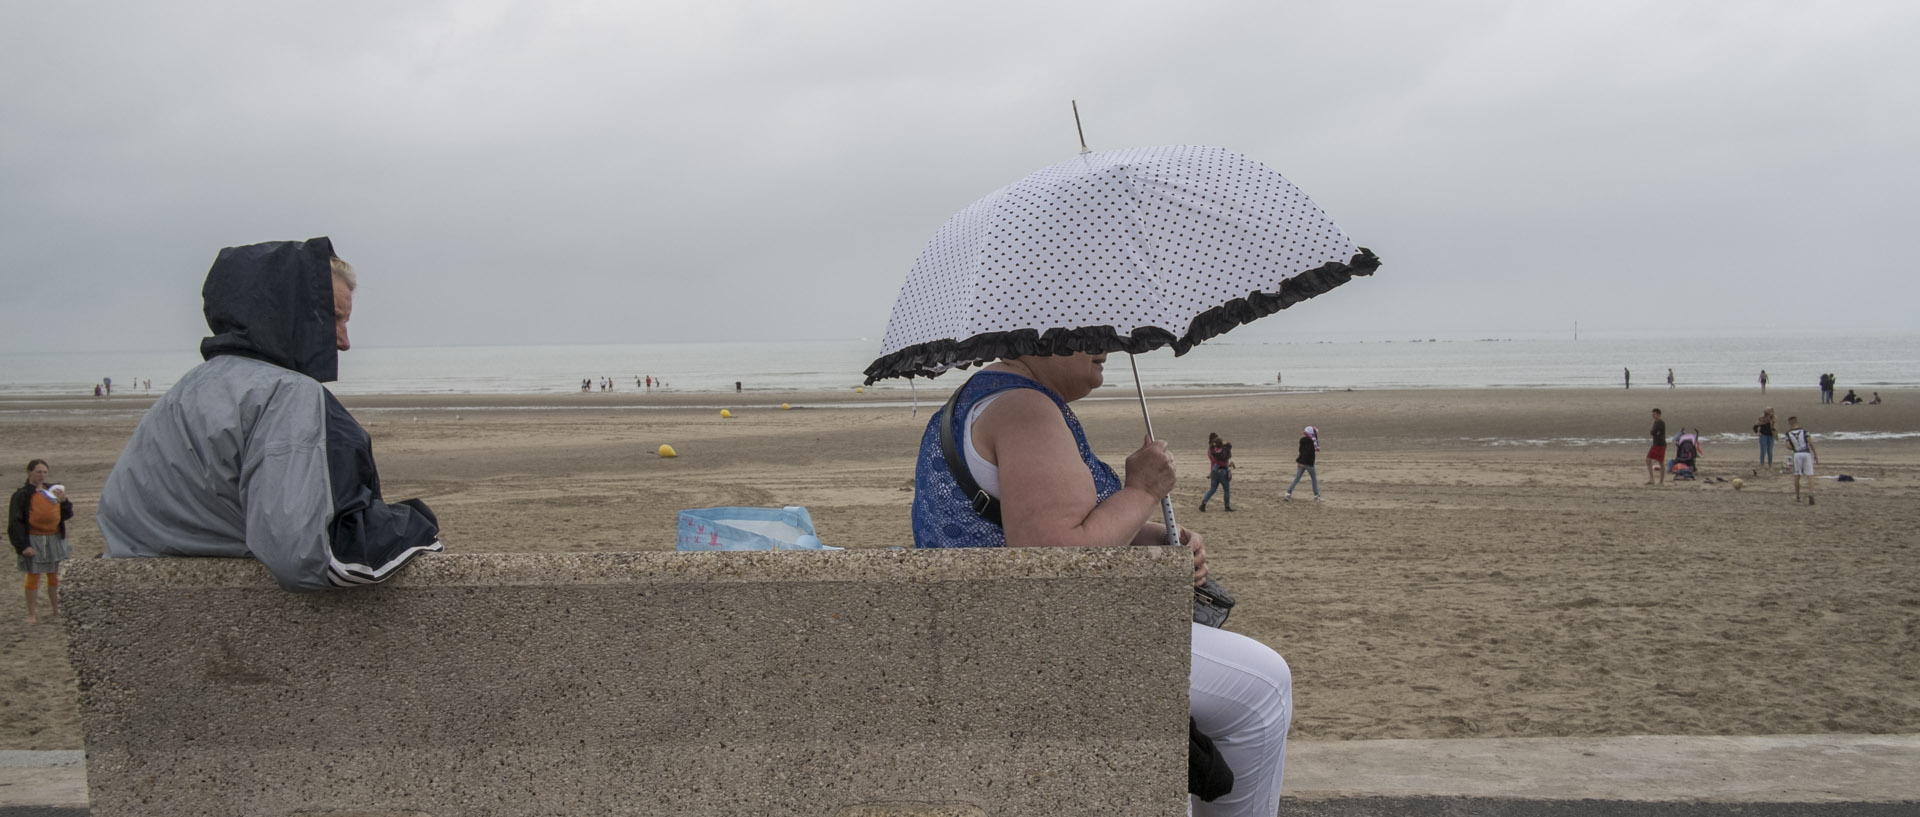 Jeudi 20 août 2015, 15:14, Malo les bains, Dunkerque